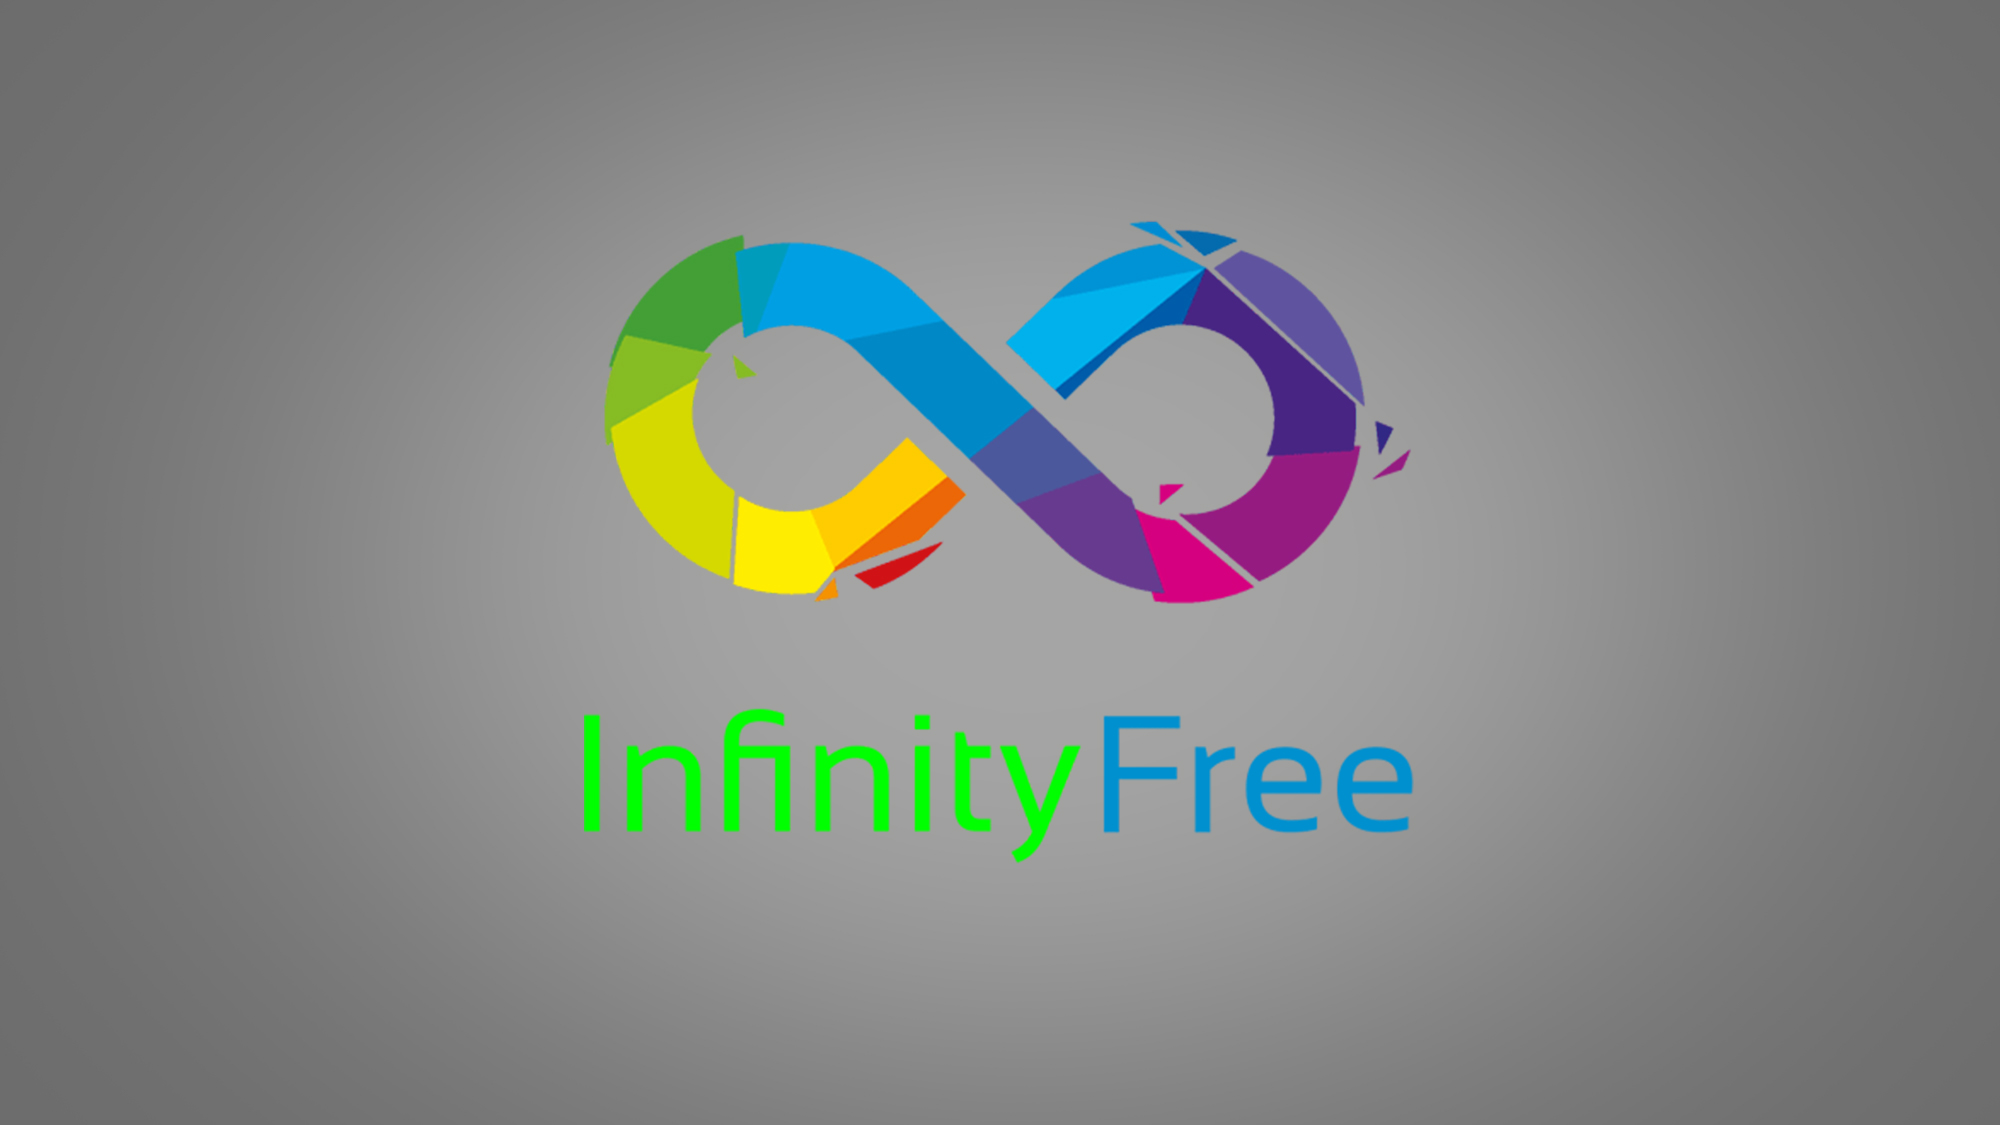 Multicoloured InfinityFree logo on grey background